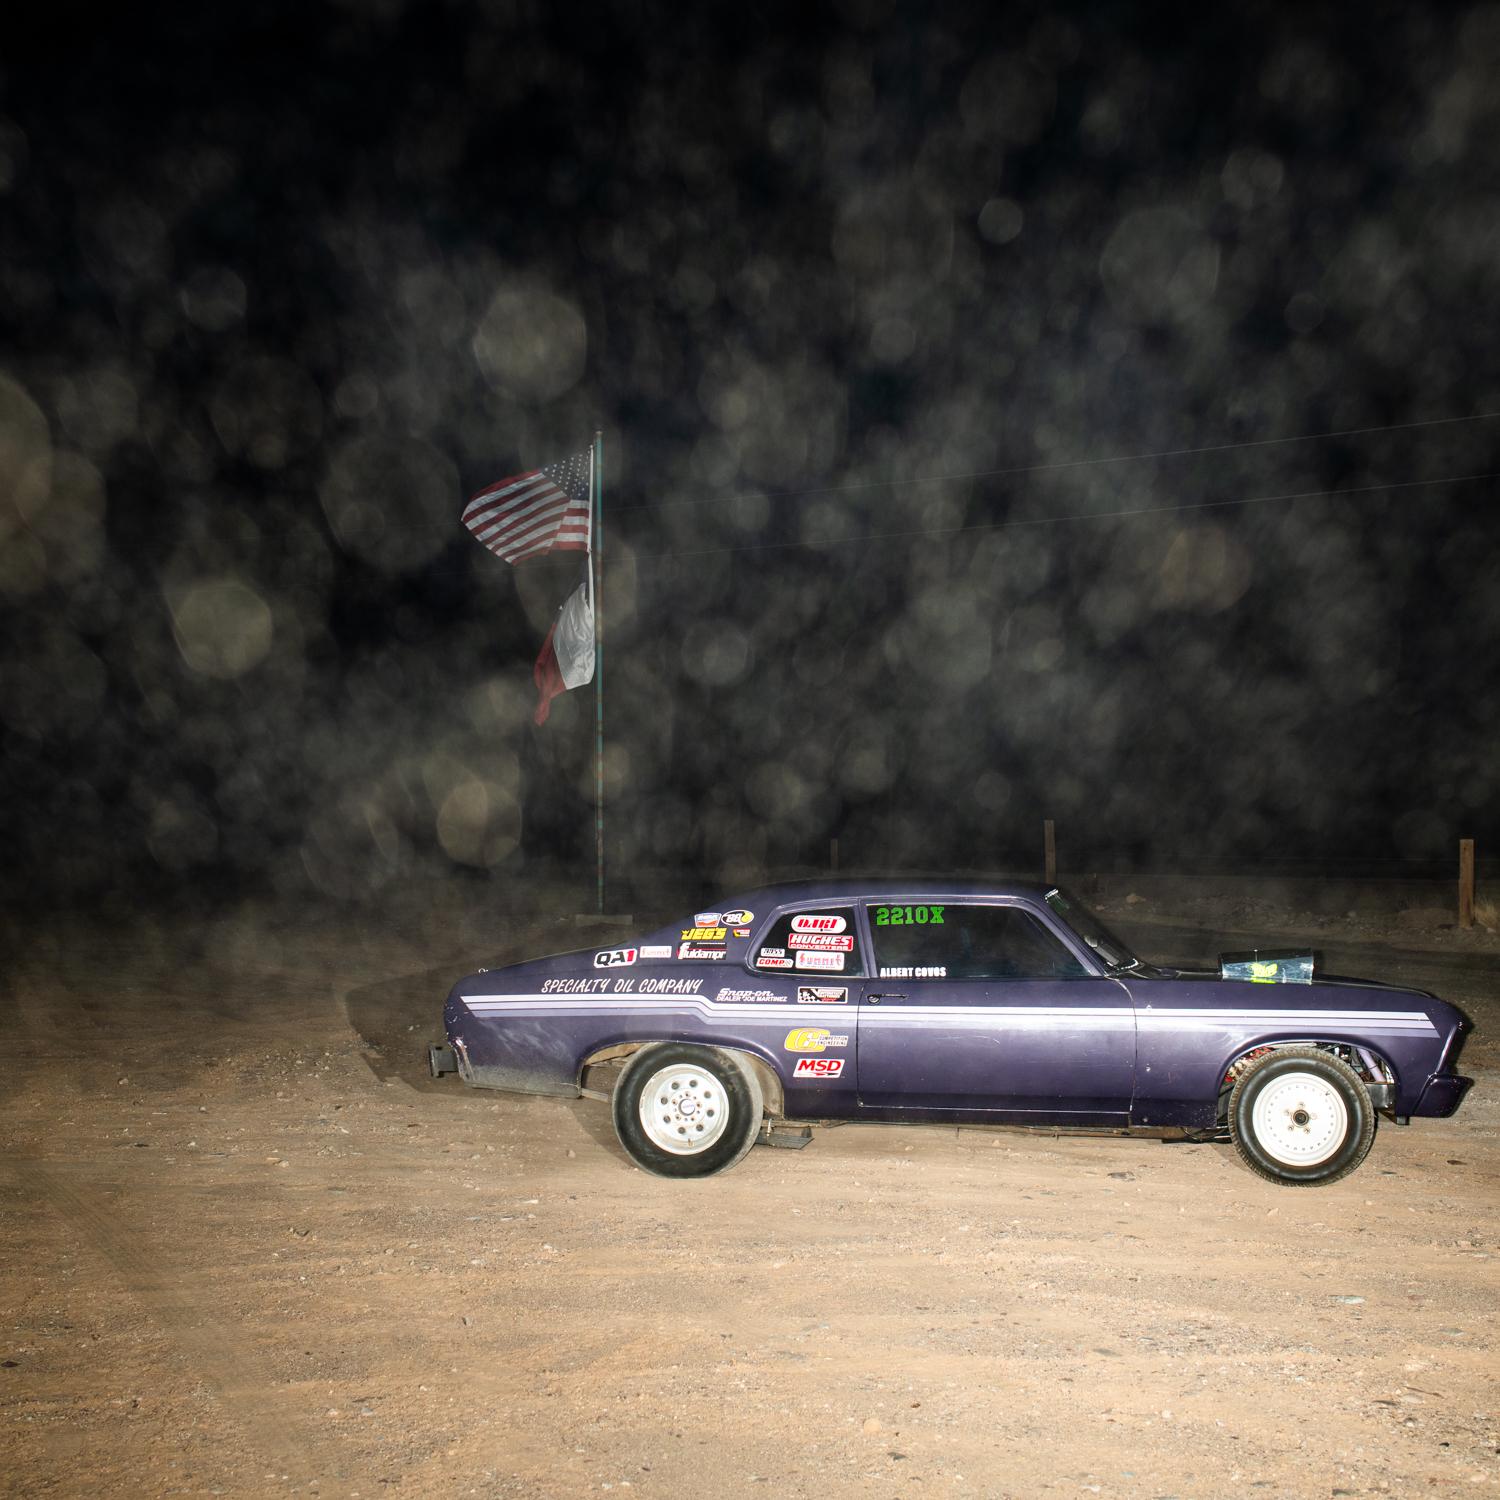 Brian Finke Landscape Photograph - Untitled (Presidio Drag Racing) 